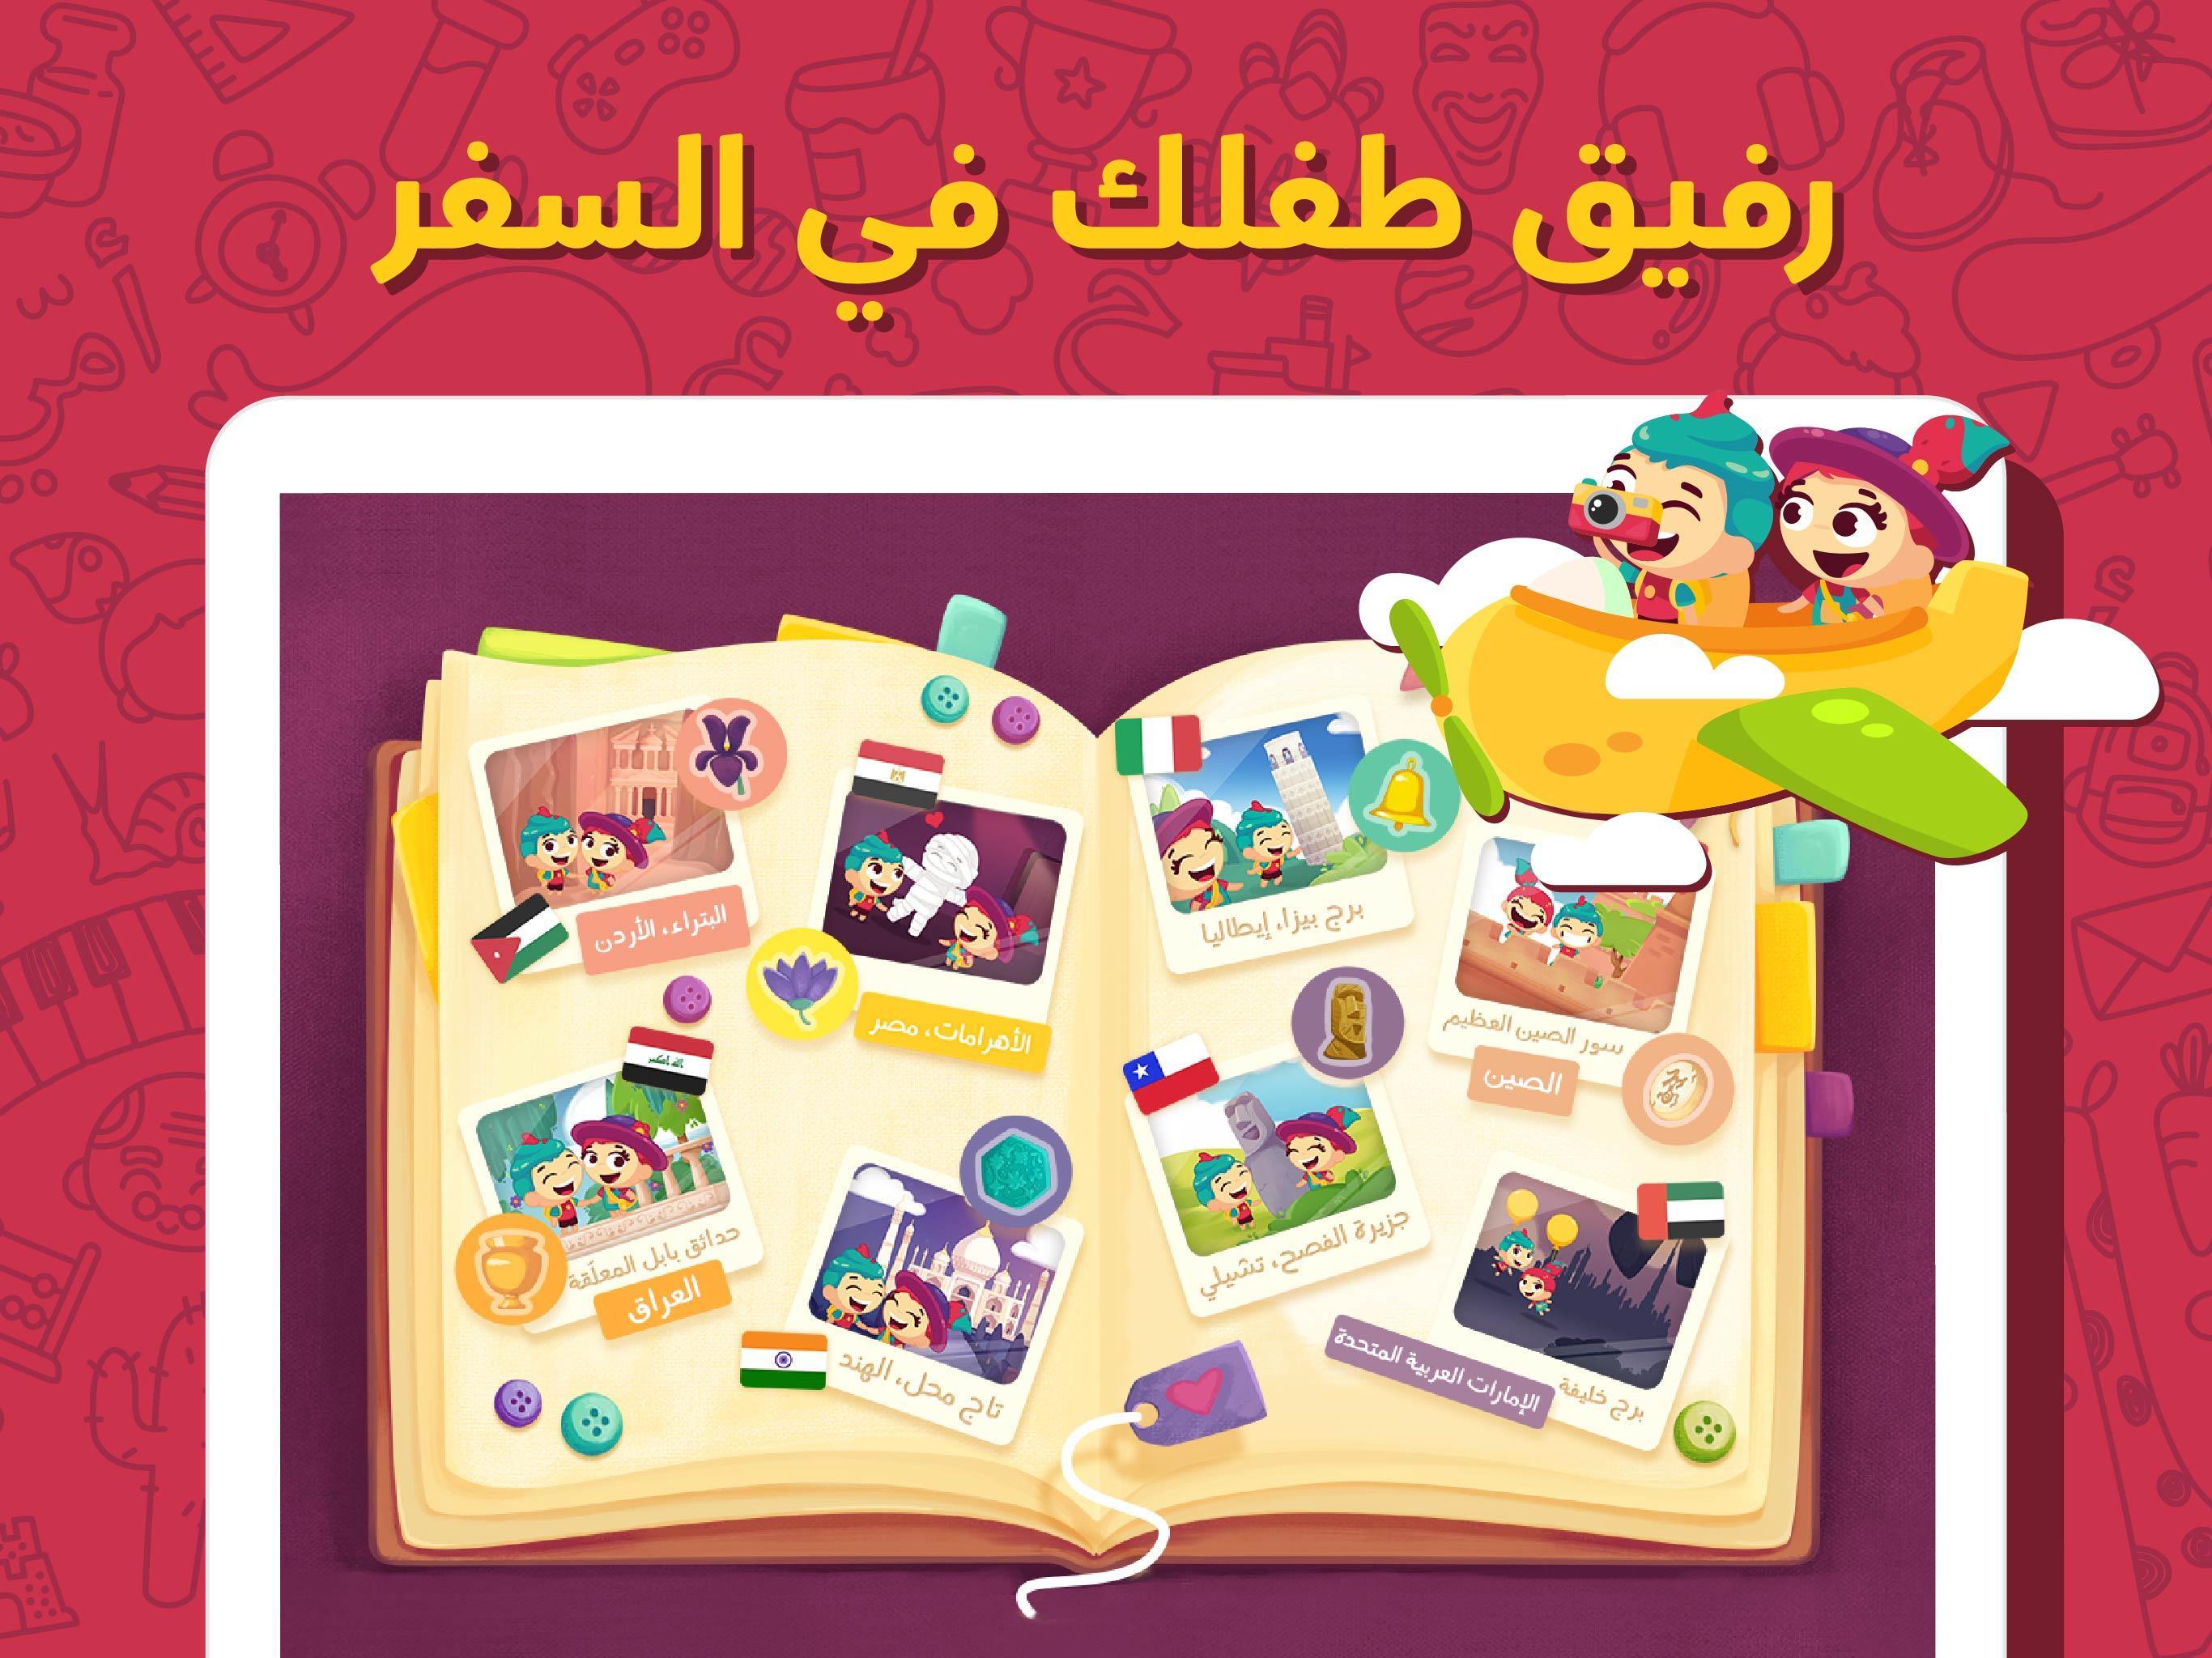 Lamsa Stories, Games, and Activities for Children 4.18.0 Screenshot 14